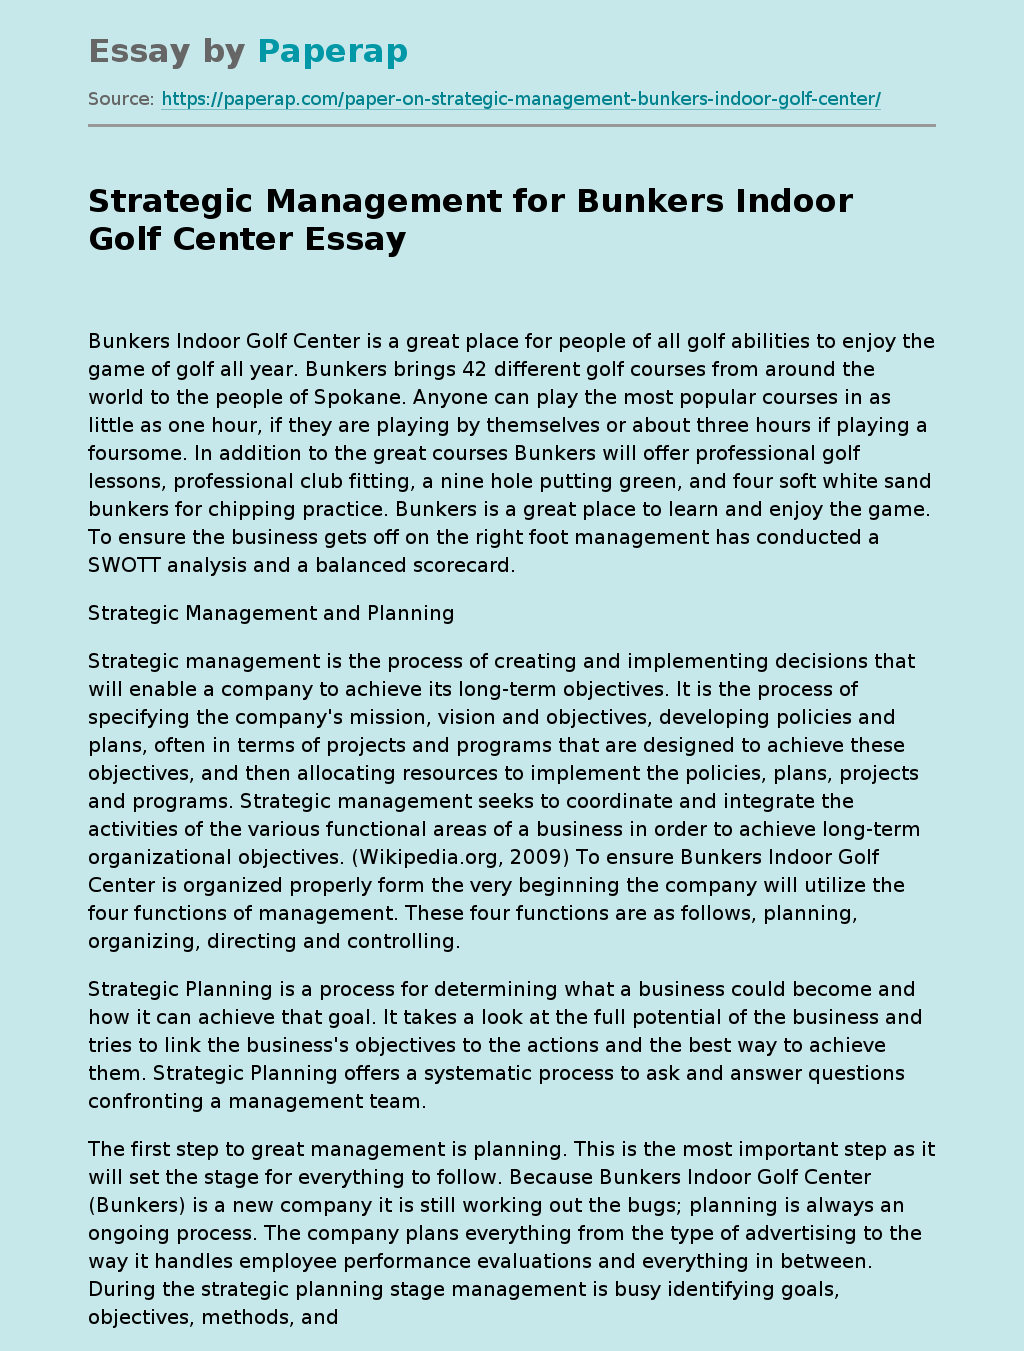 Strategic Management for Bunkers Indoor Golf Center